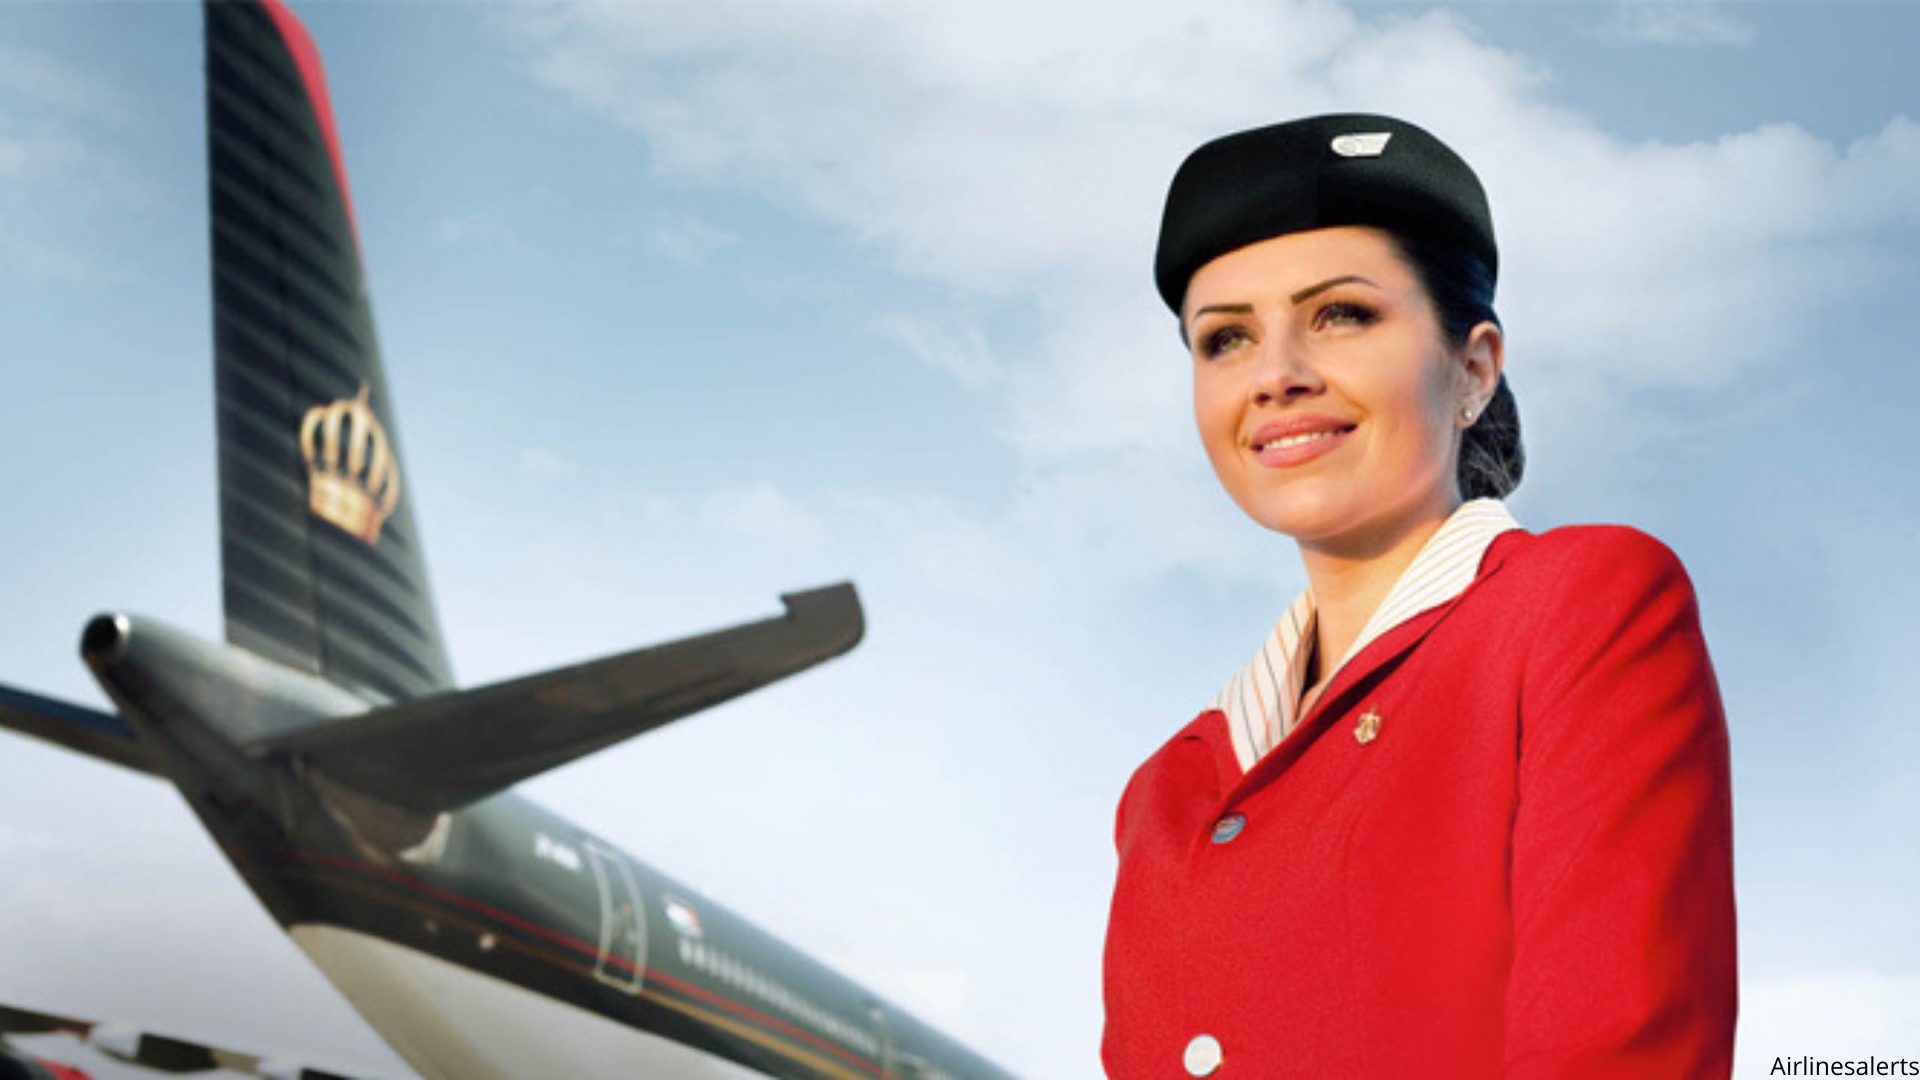 Royal Jordanian Flight attendant Recruitment 2022 (Aug) - Check Details & Apply 